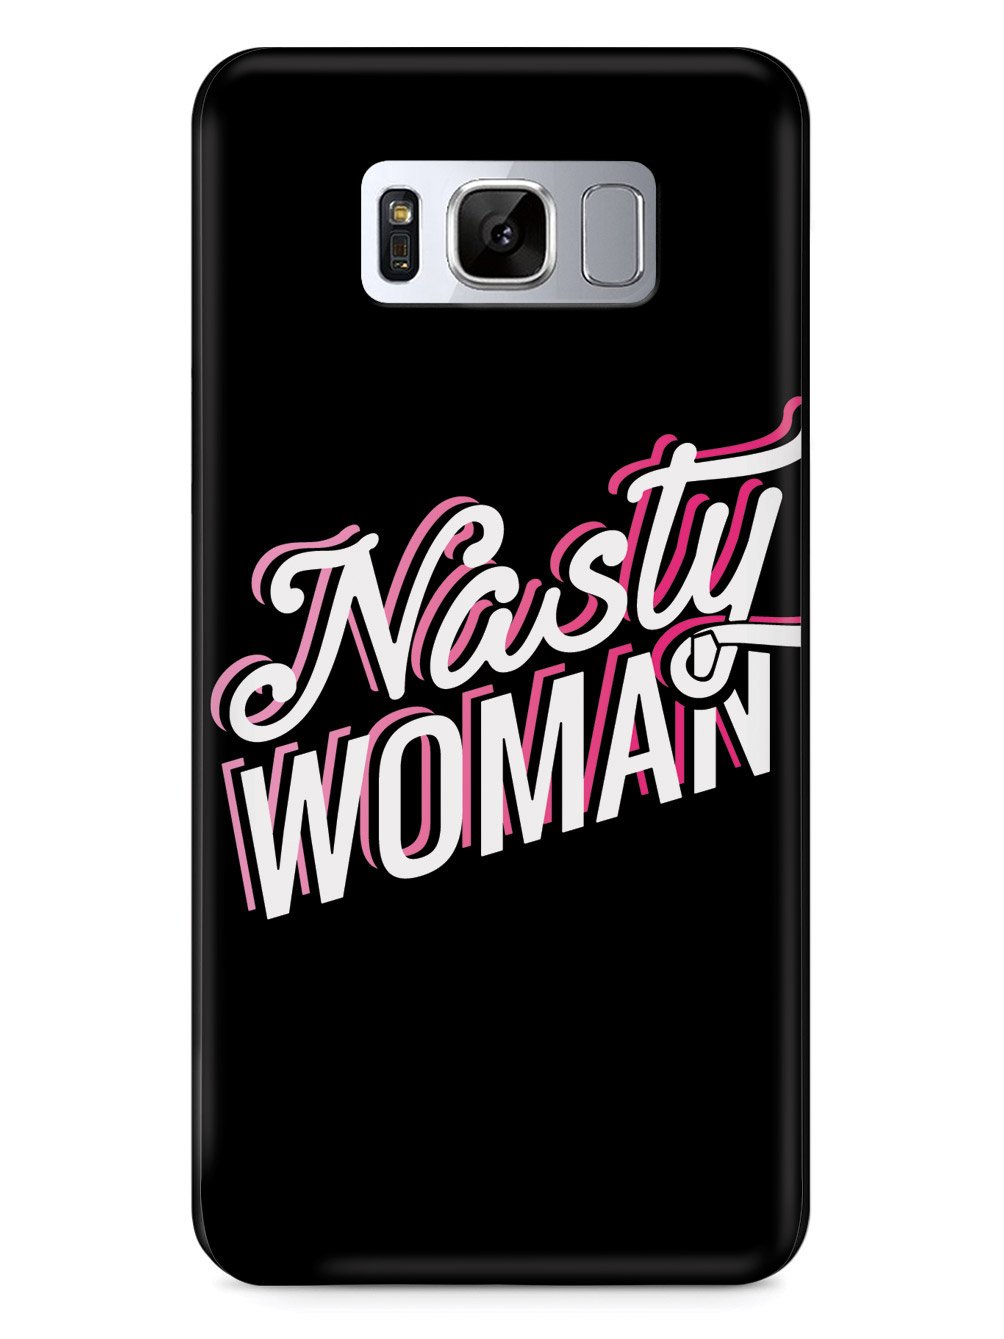 Nasty Woman - Black Case - pipercleo.com